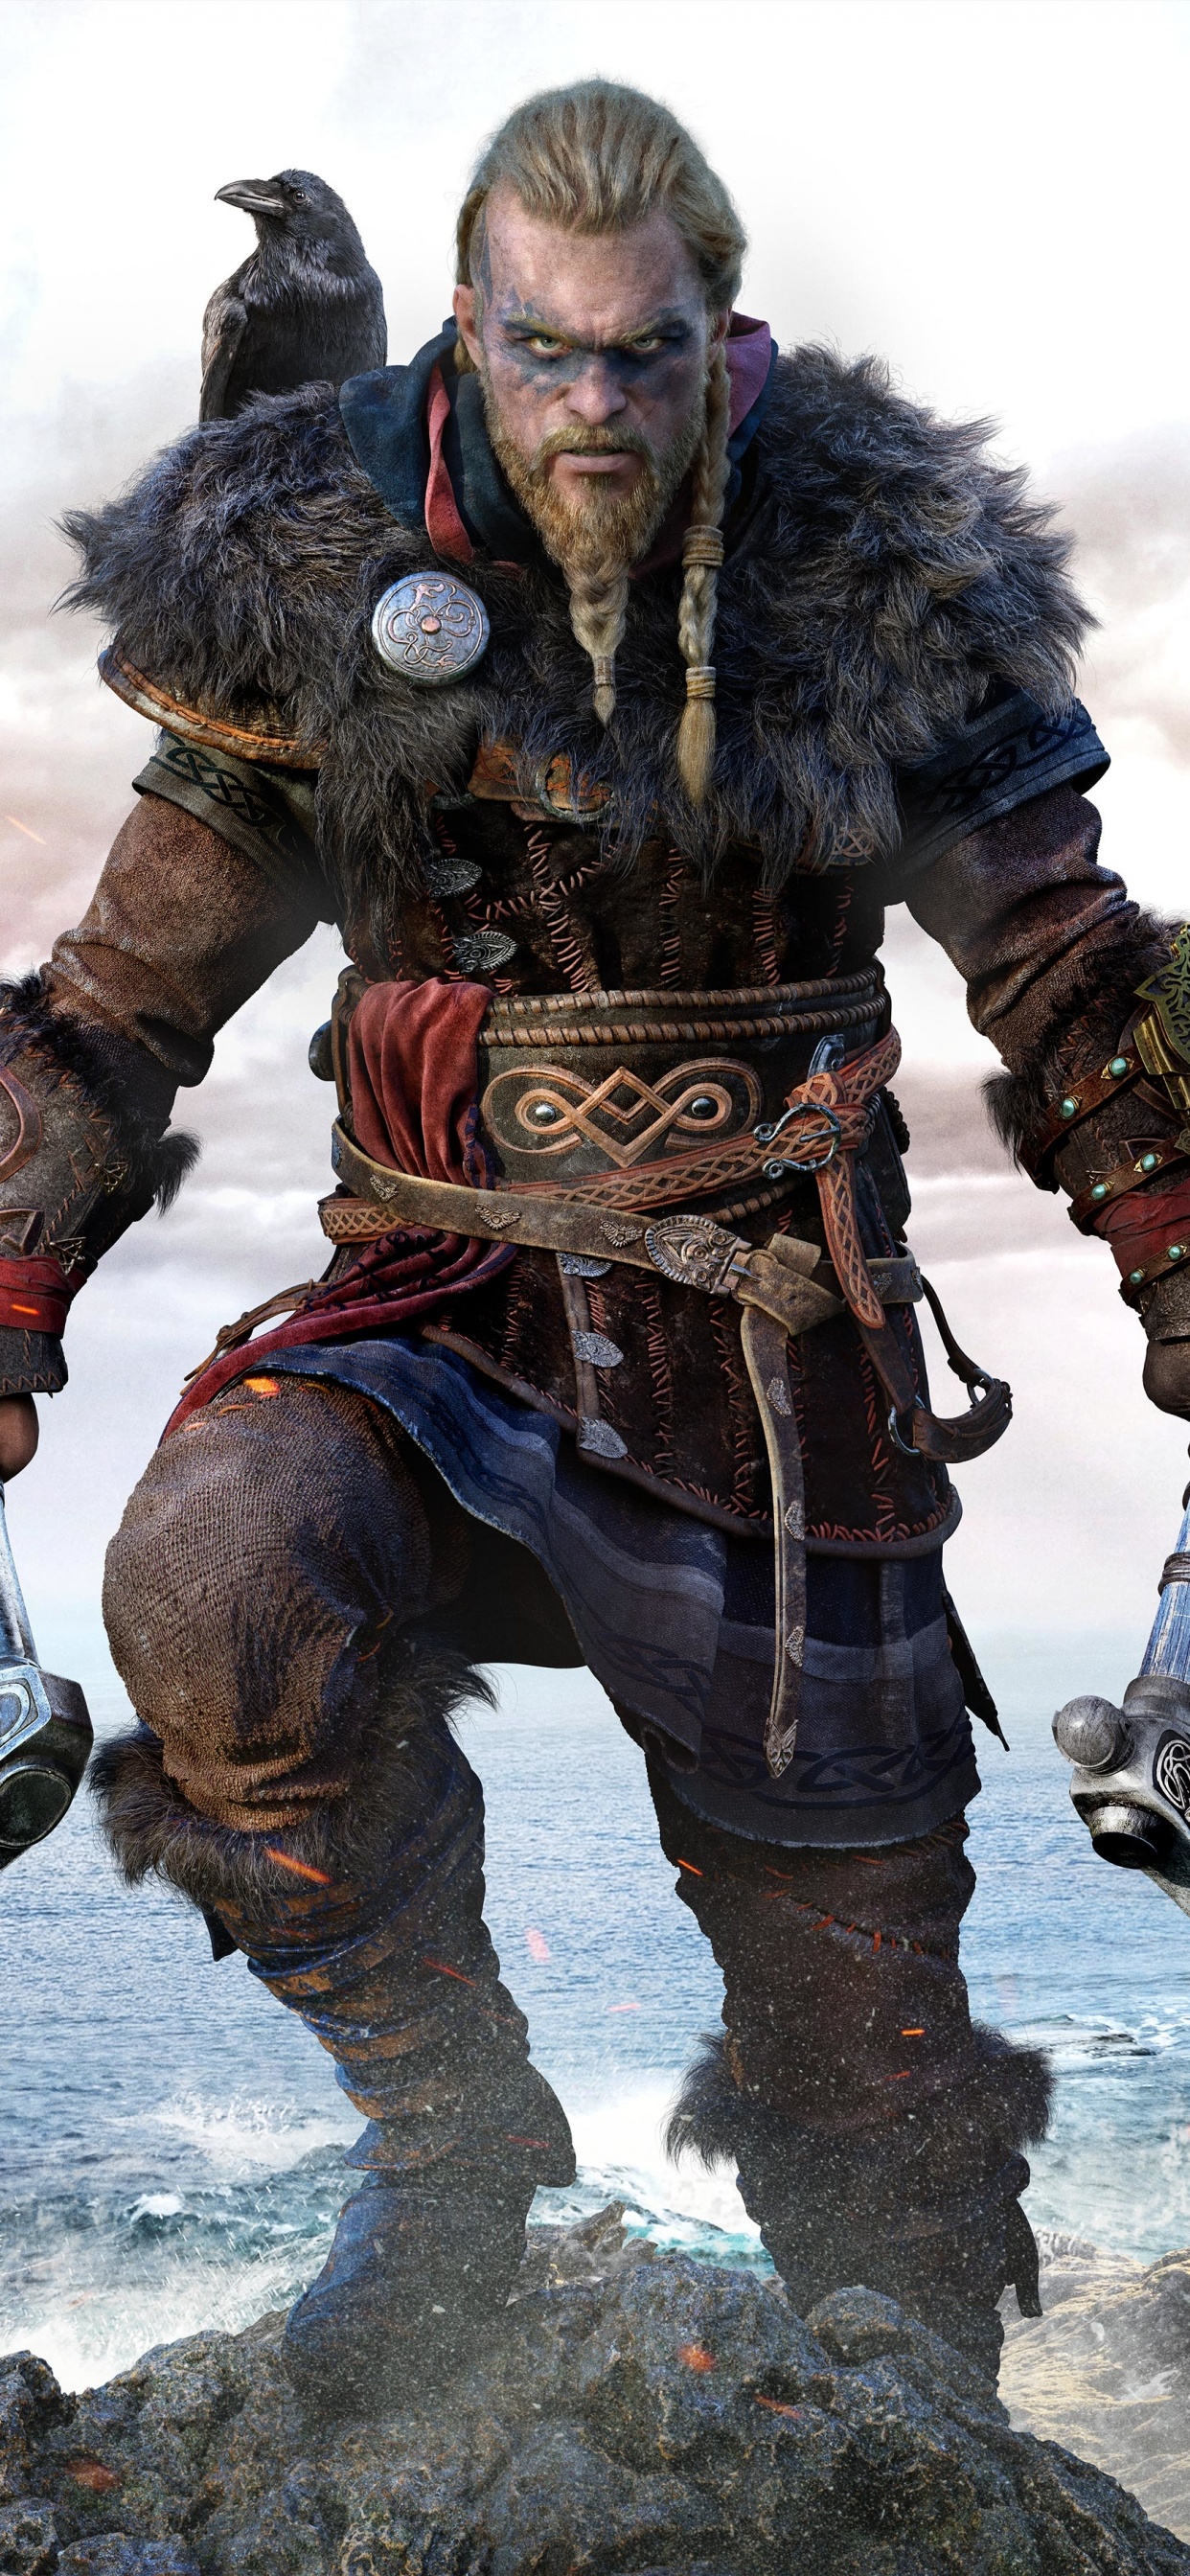 Assassin's Creed Valhalla 4K Wallpaper, Eivor, Viking raider, PC games